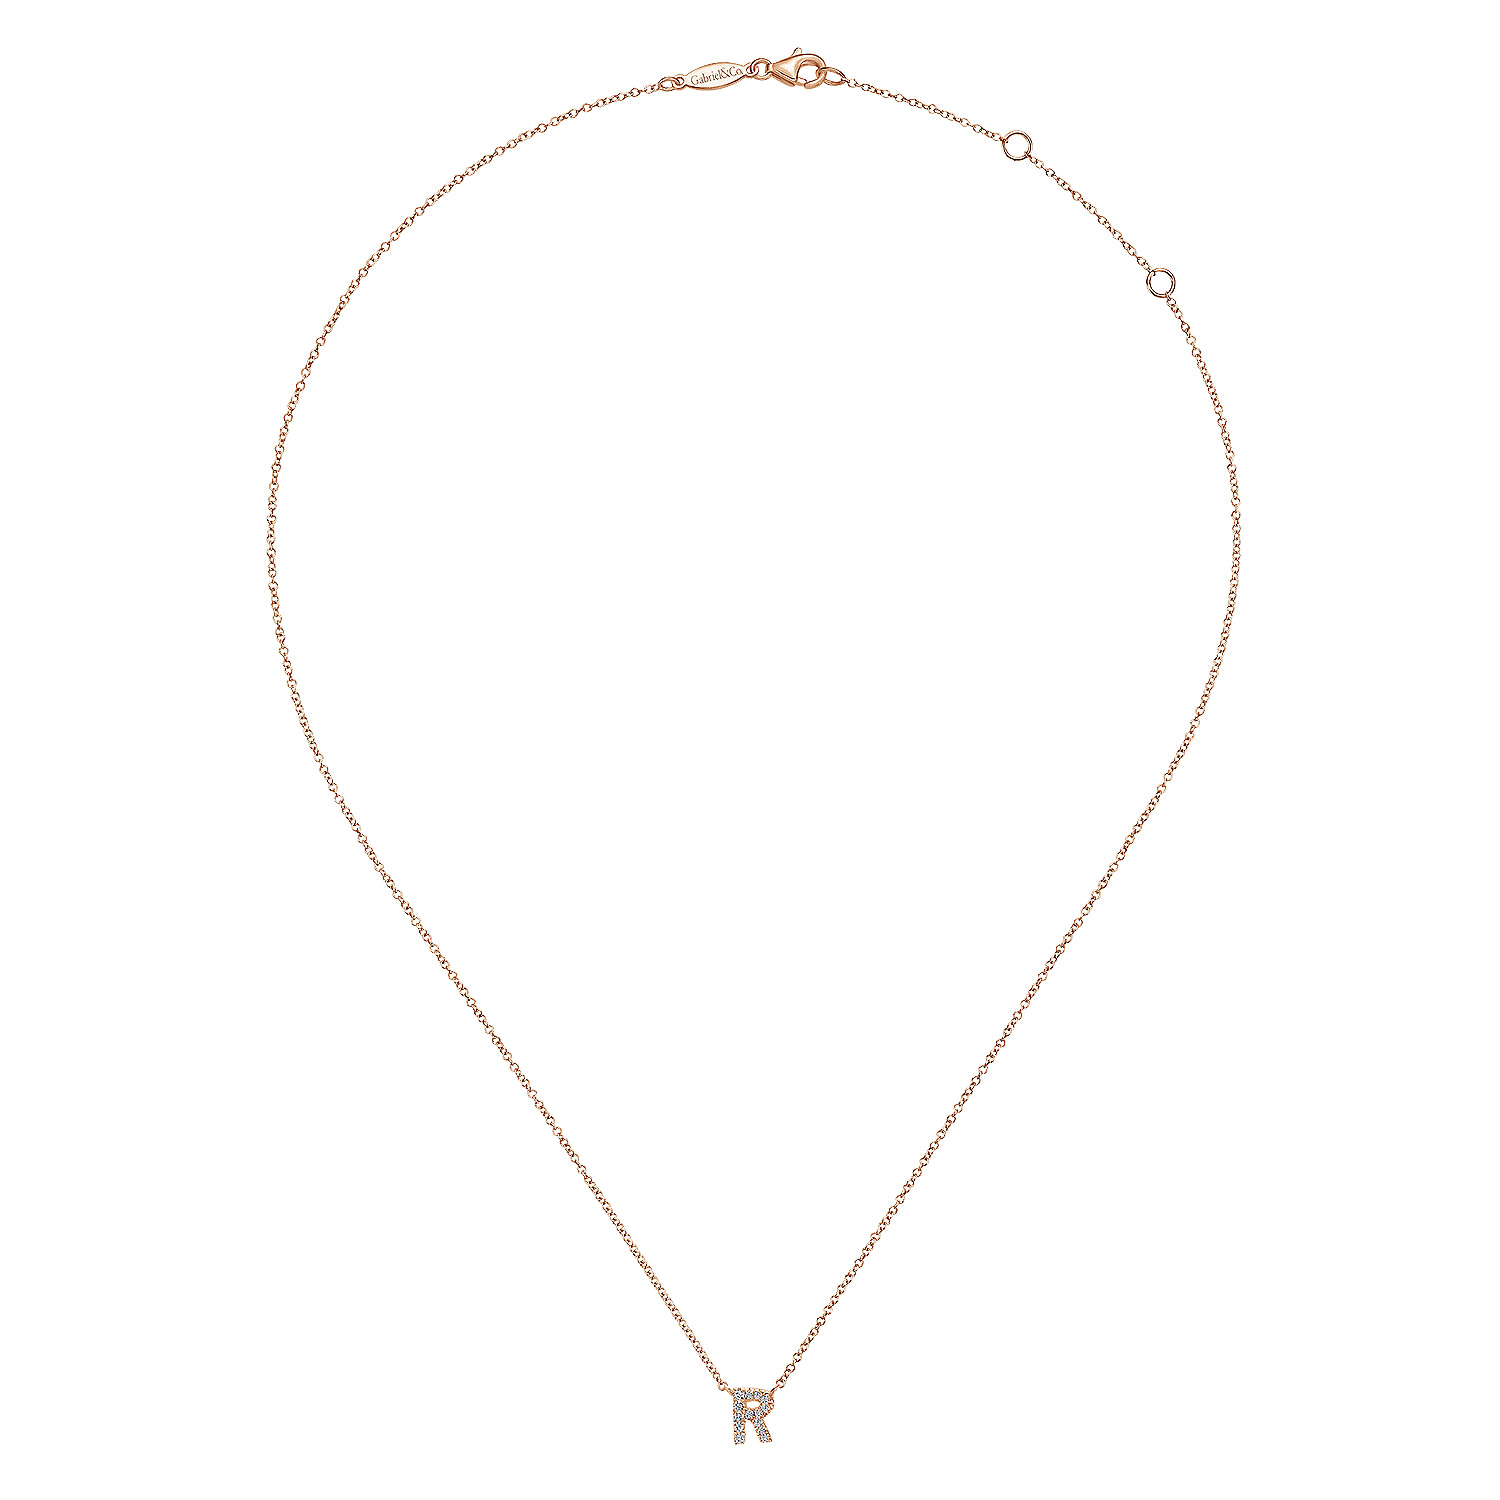 14K Rose Gold Diamond R Initial Pendant Necklace